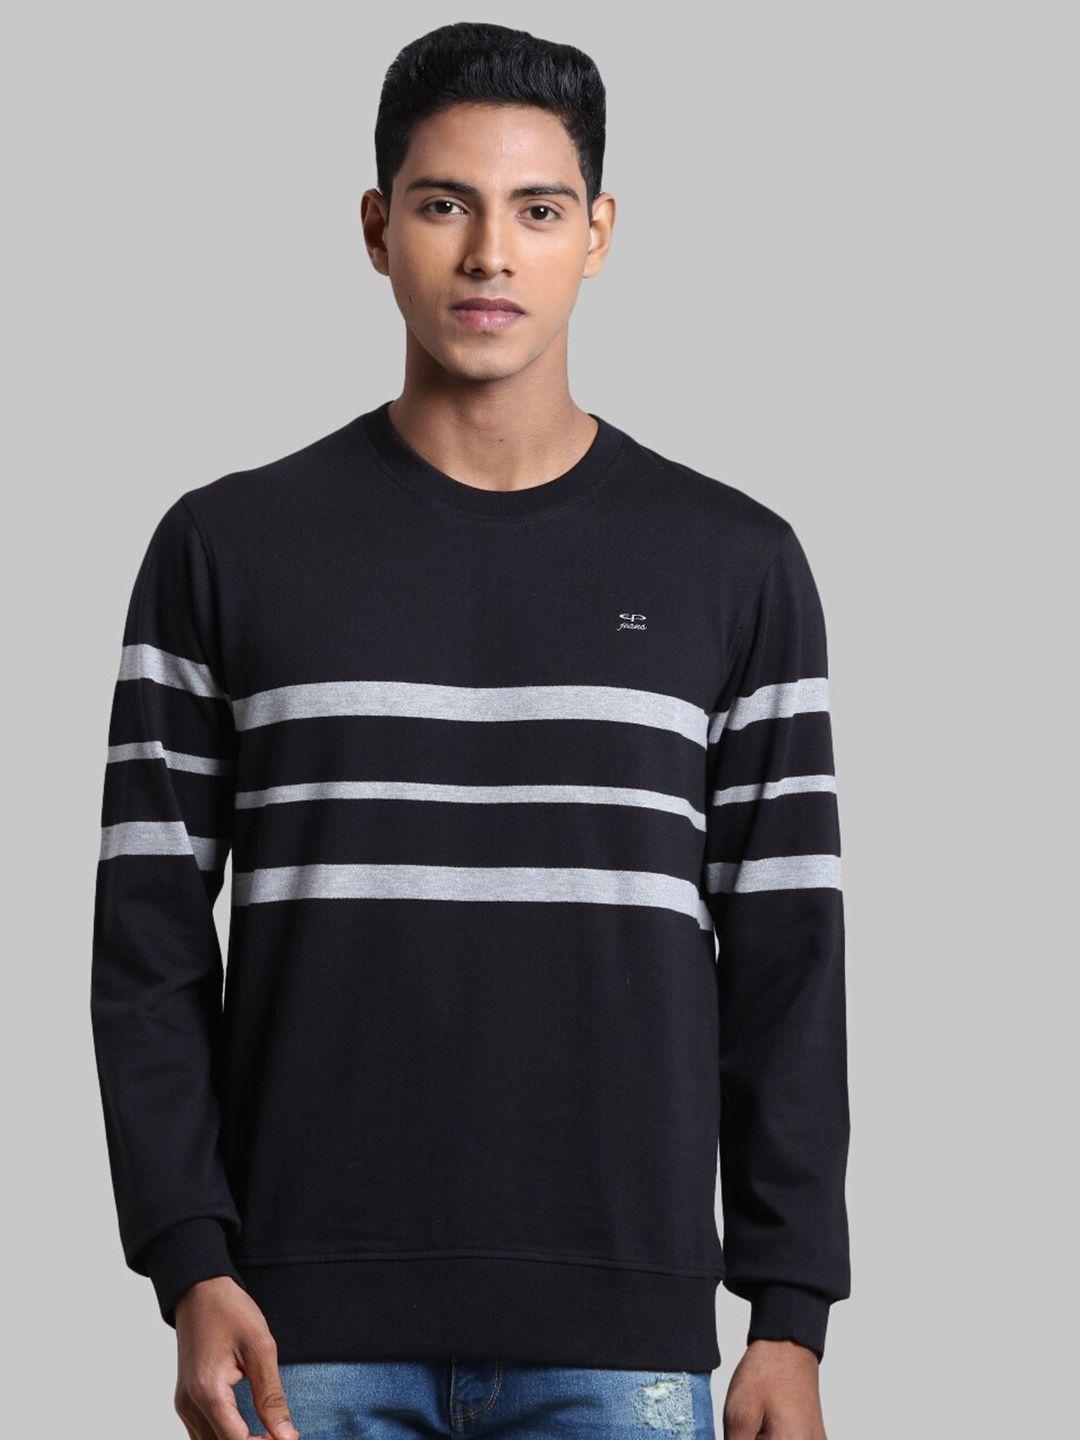 colorplus-men-black-striped-cotton-sweatshirt